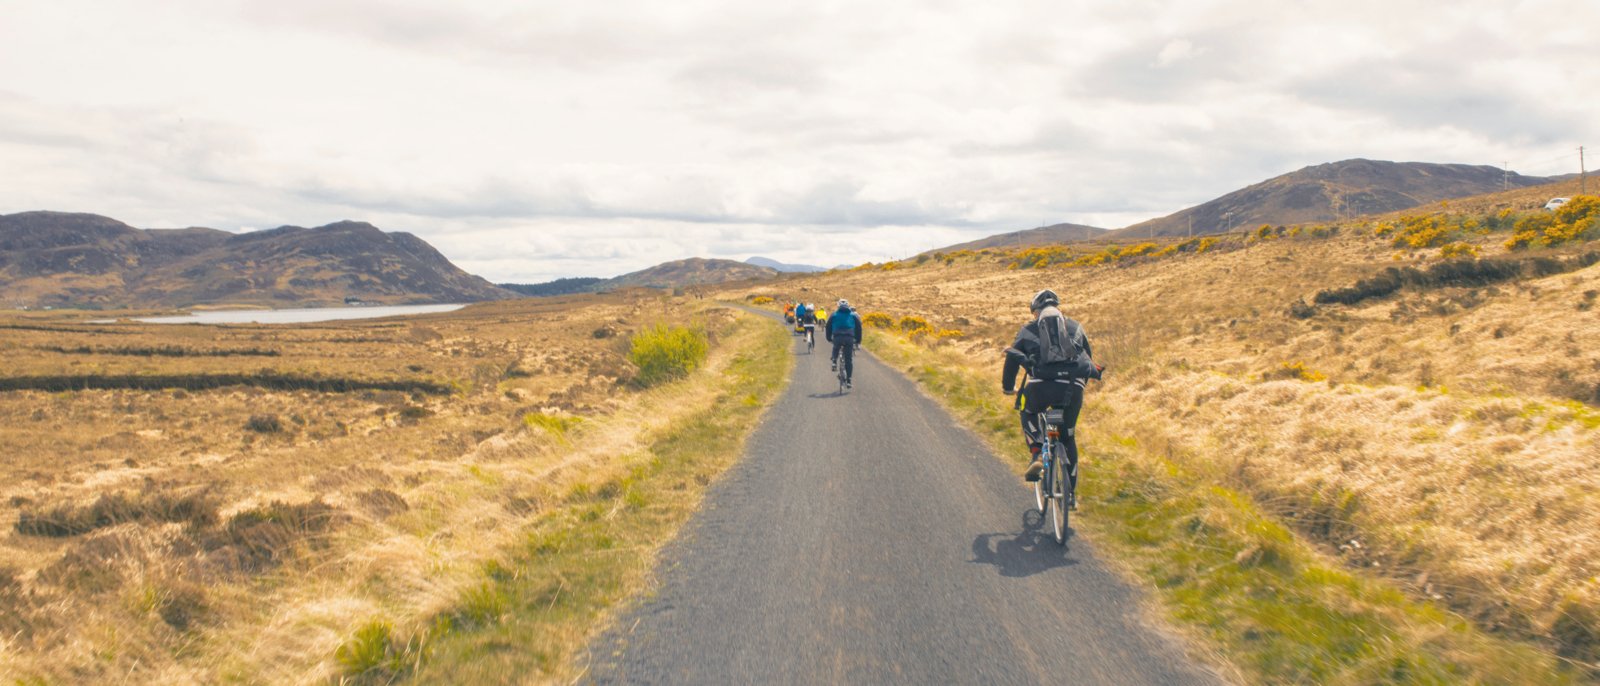 Cyclists in beautiful landscape, The Great Western Greenway,Westport, Mayo, Ireland